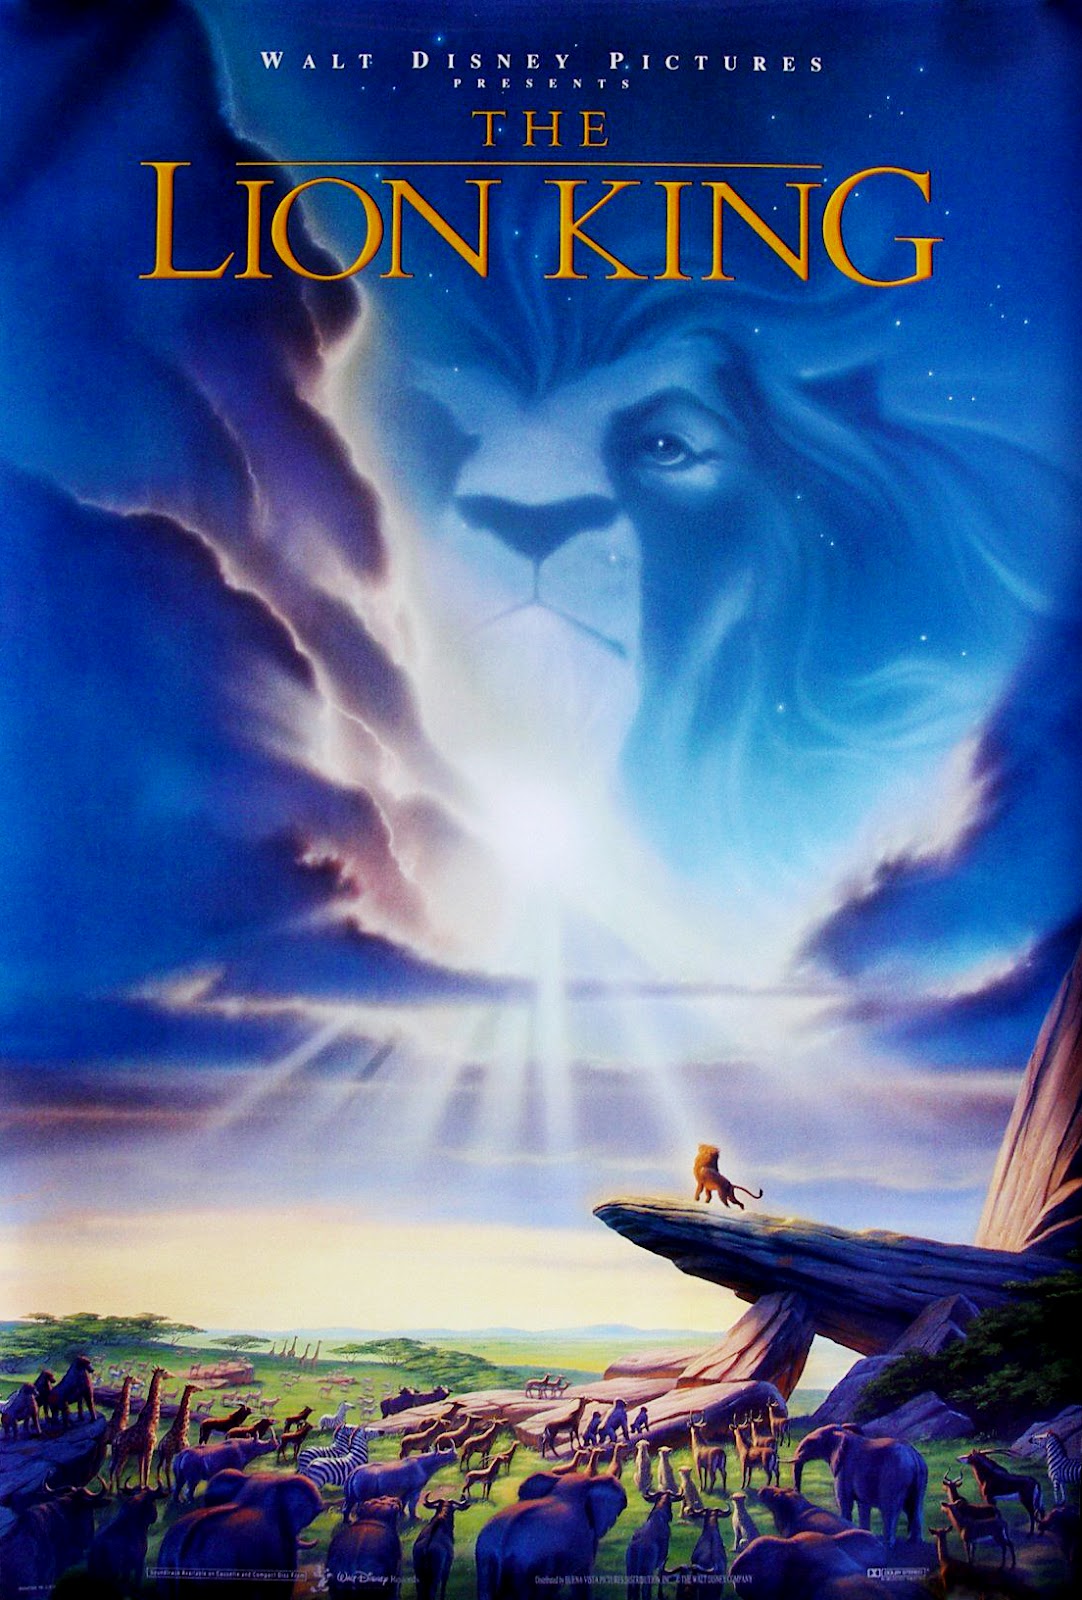 Lion King (1994) by John Alvin